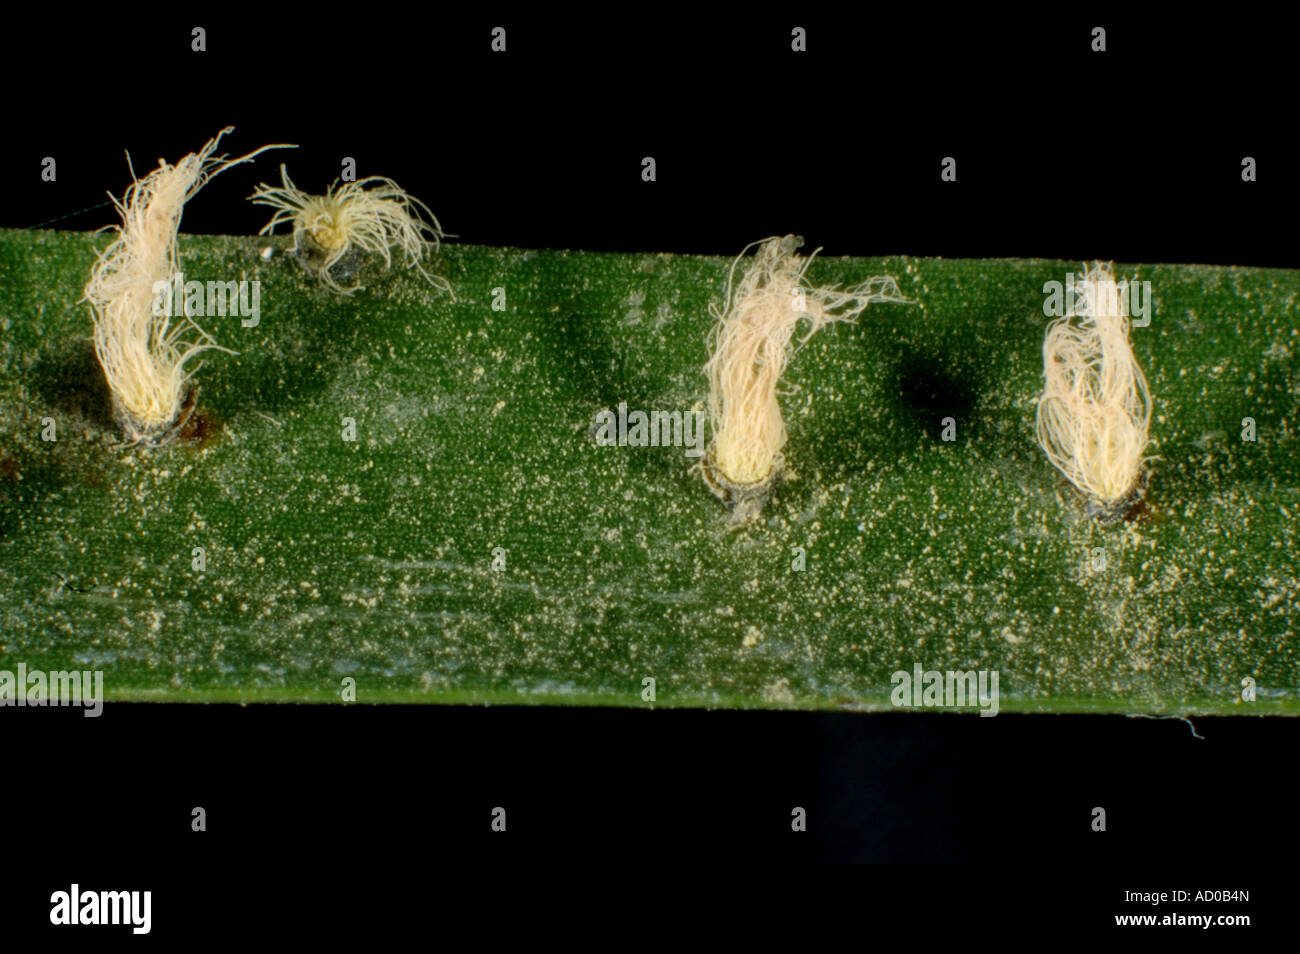 Palm false smut Graphiola phoenicis pustules sporulating on a palm leaf surface Stock Photo